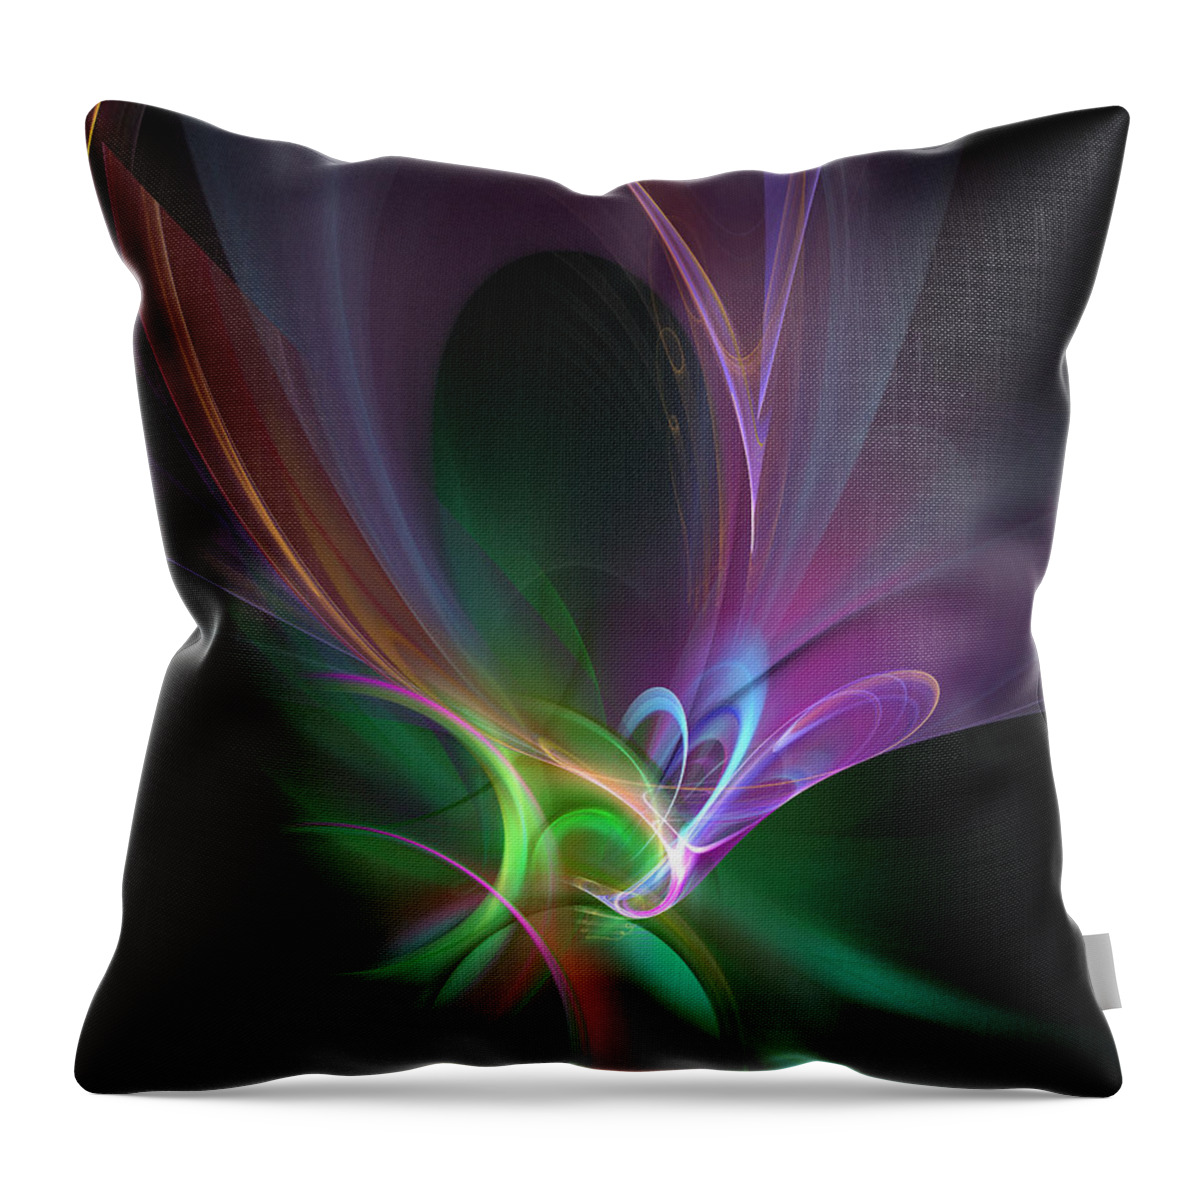 Phoenix Throw Pillow featuring the digital art The Phoenix by Ricky Barnard